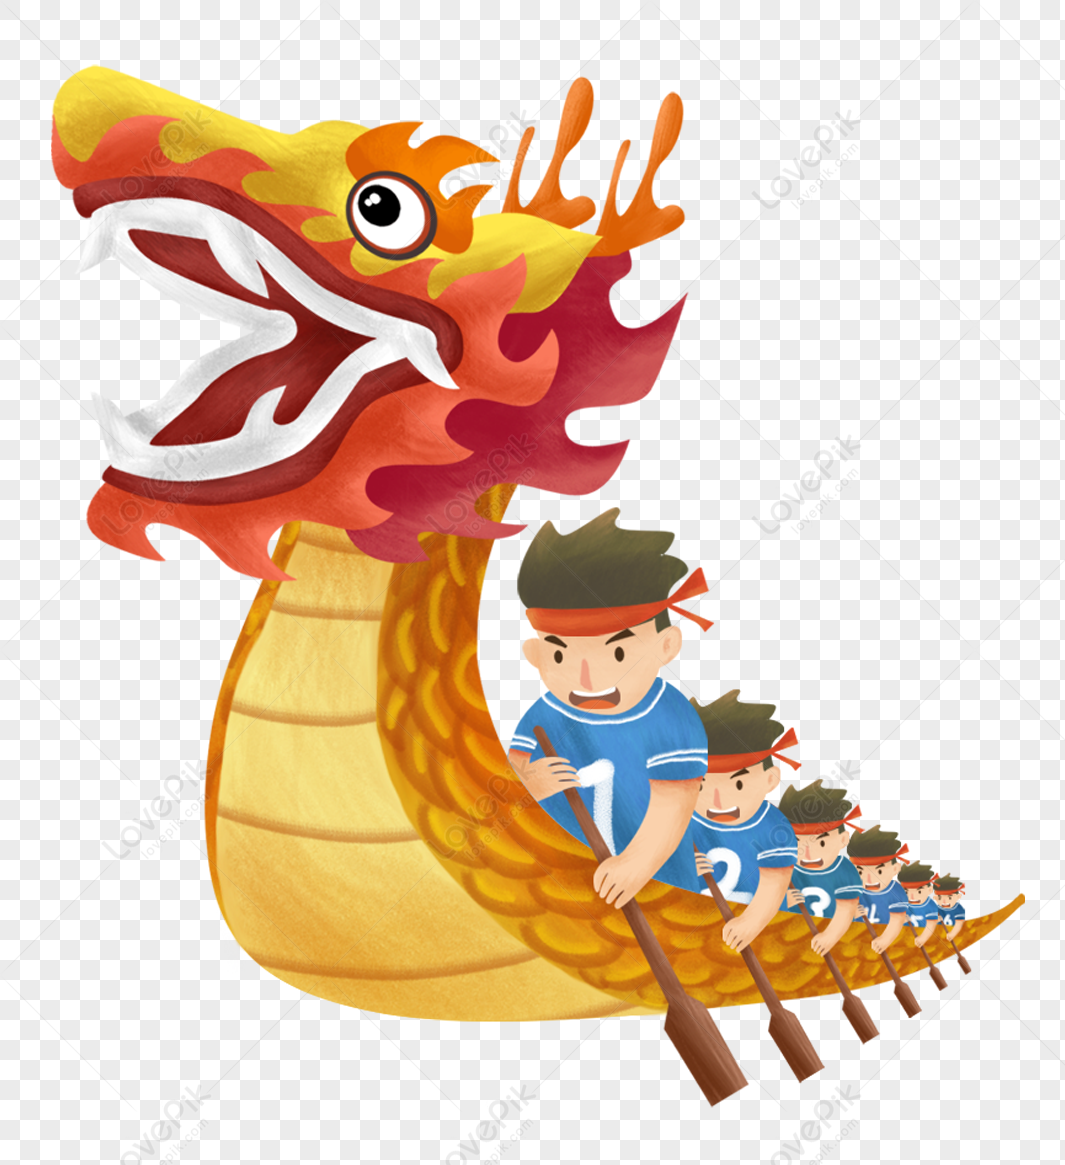 Dragon Boat Festive PNG Picture, Vietnam Dragon Boat Festival Minimalist  Dragon Boat, Vietnam, Dragon Boat Race, Dragon Boat Festival PNG Image For  Free Download